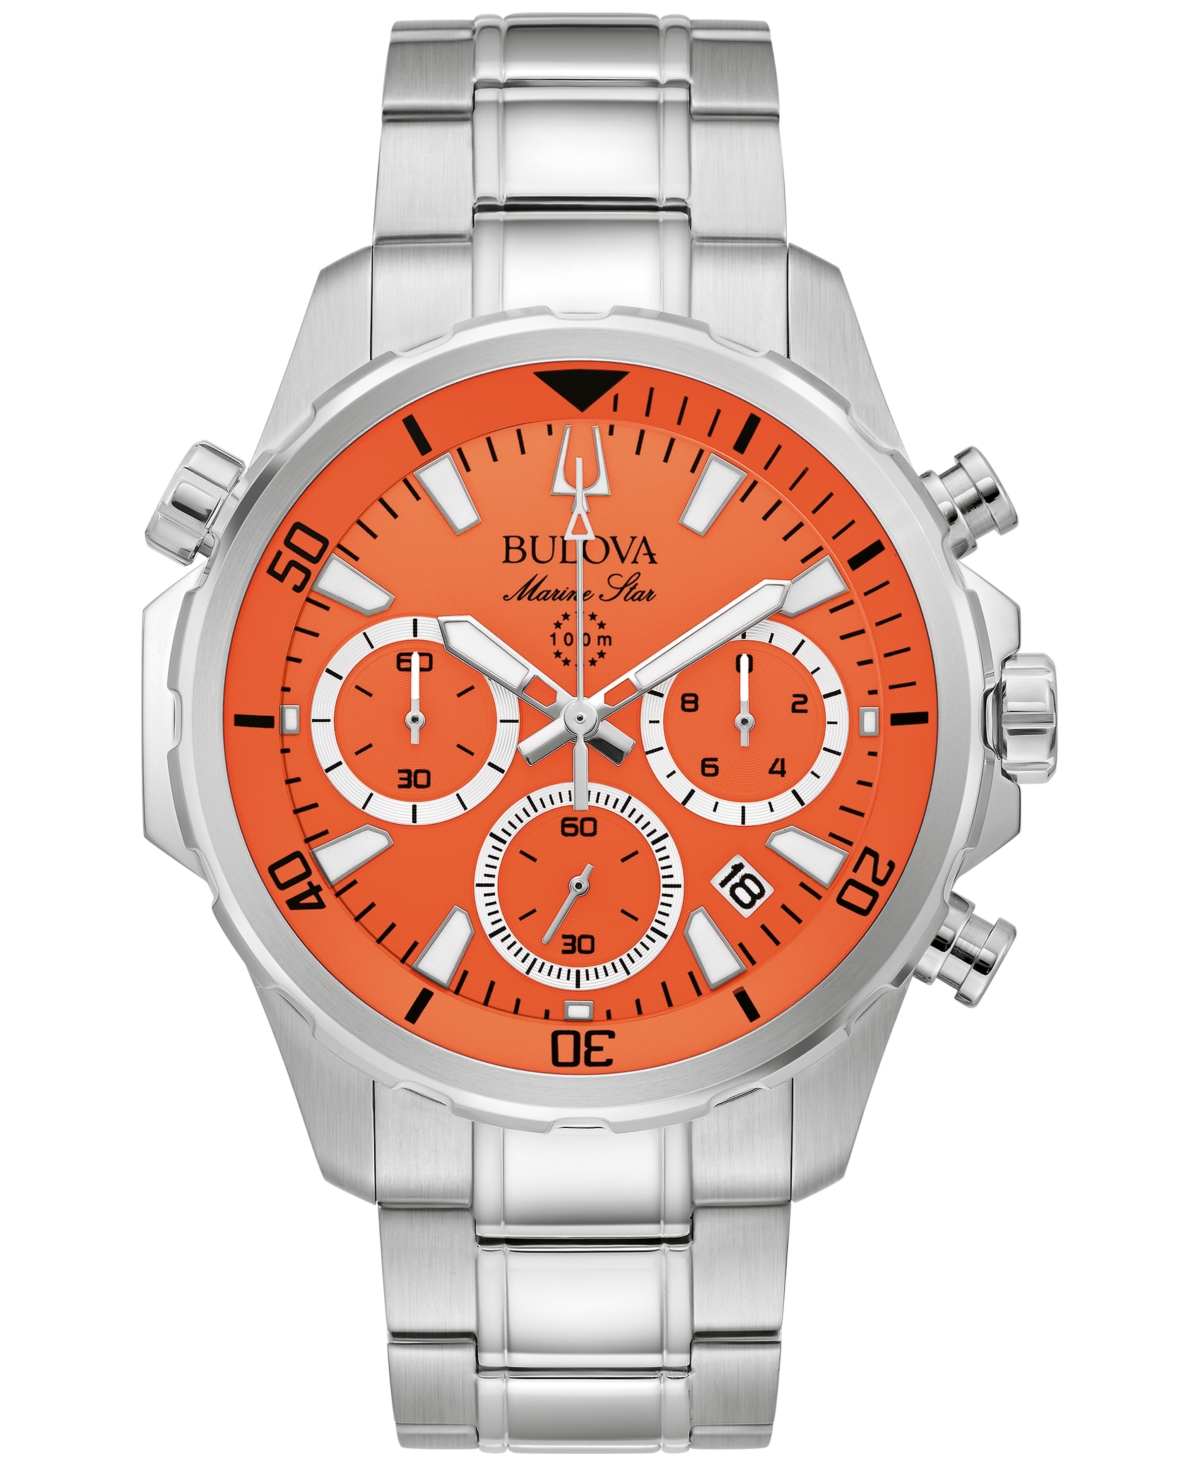 Bulova Men's Chronograph Marine Star Stainless Steel Bracelet Watch 44mm In Orange